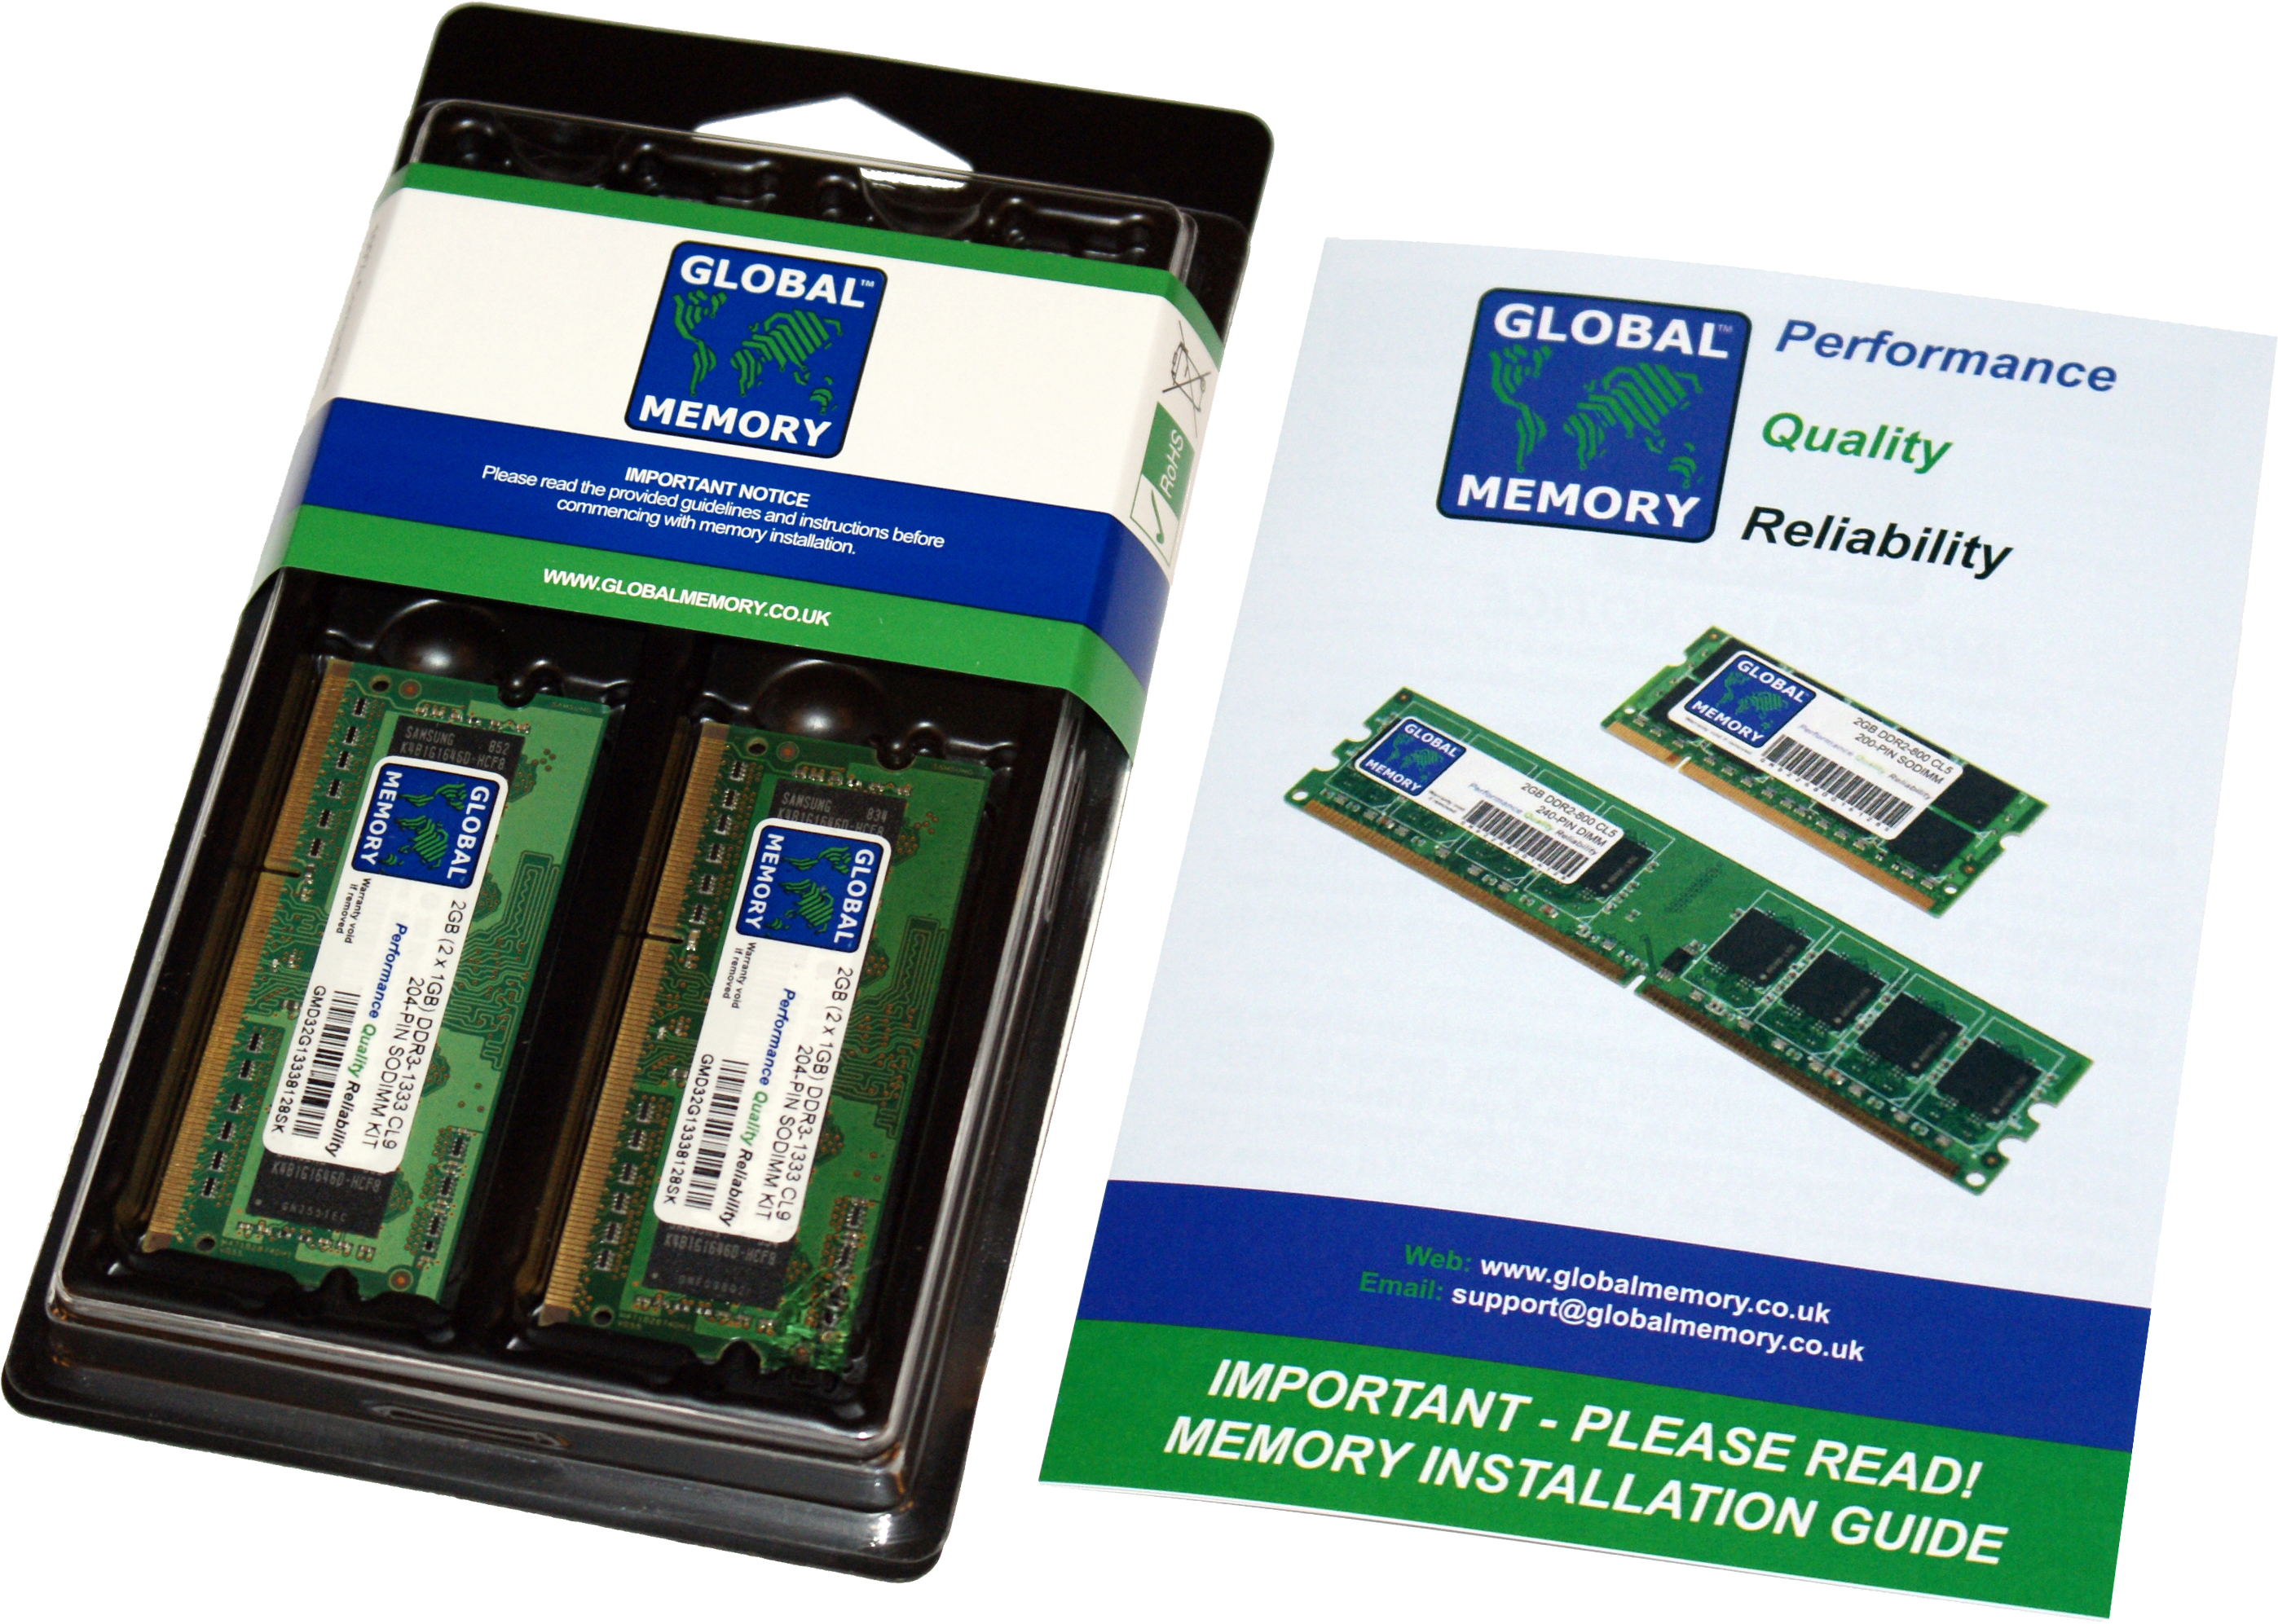 8GB (2 x 4GB) DDR4 2133MHz PC4-17000 260-PIN SODIMM MEMORY RAM KIT FOR ACER LAPTOPS/NOTEBOOKS